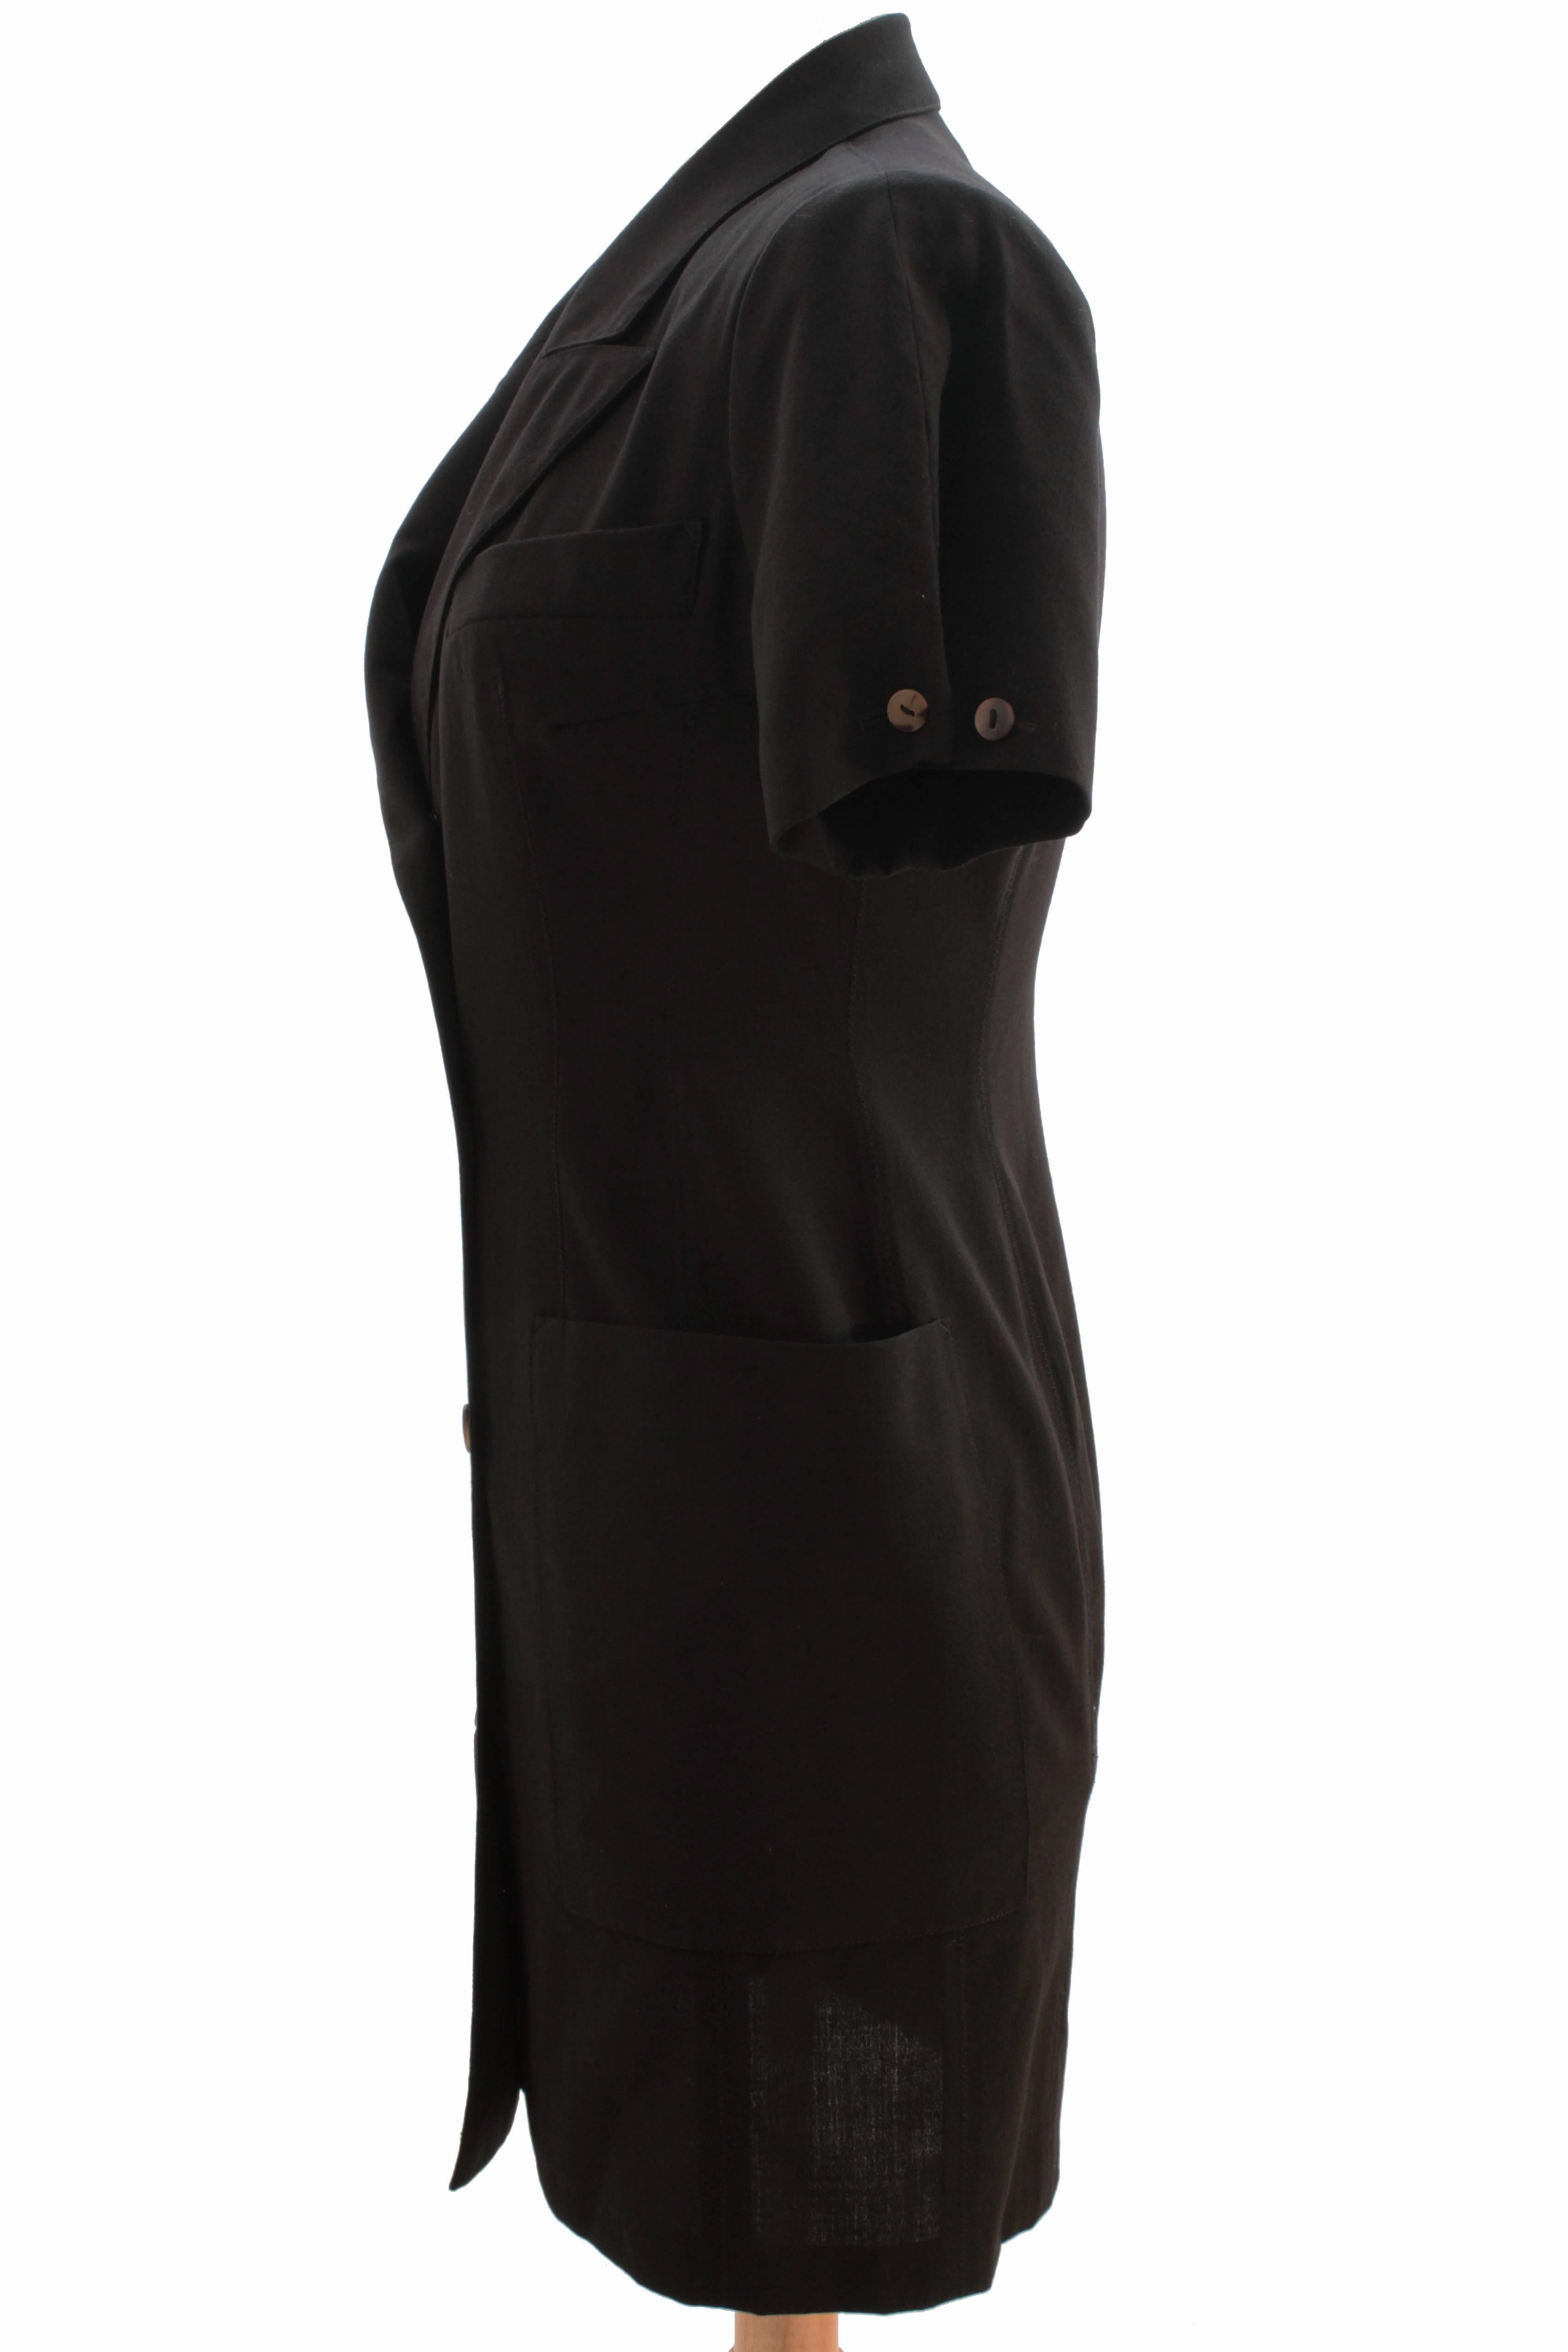 Jean Paul Gaultier Pour Gibo Black Shirt Dress Chic Oversized Pockets Sz 40 90s In Excellent Condition In Port Saint Lucie, FL